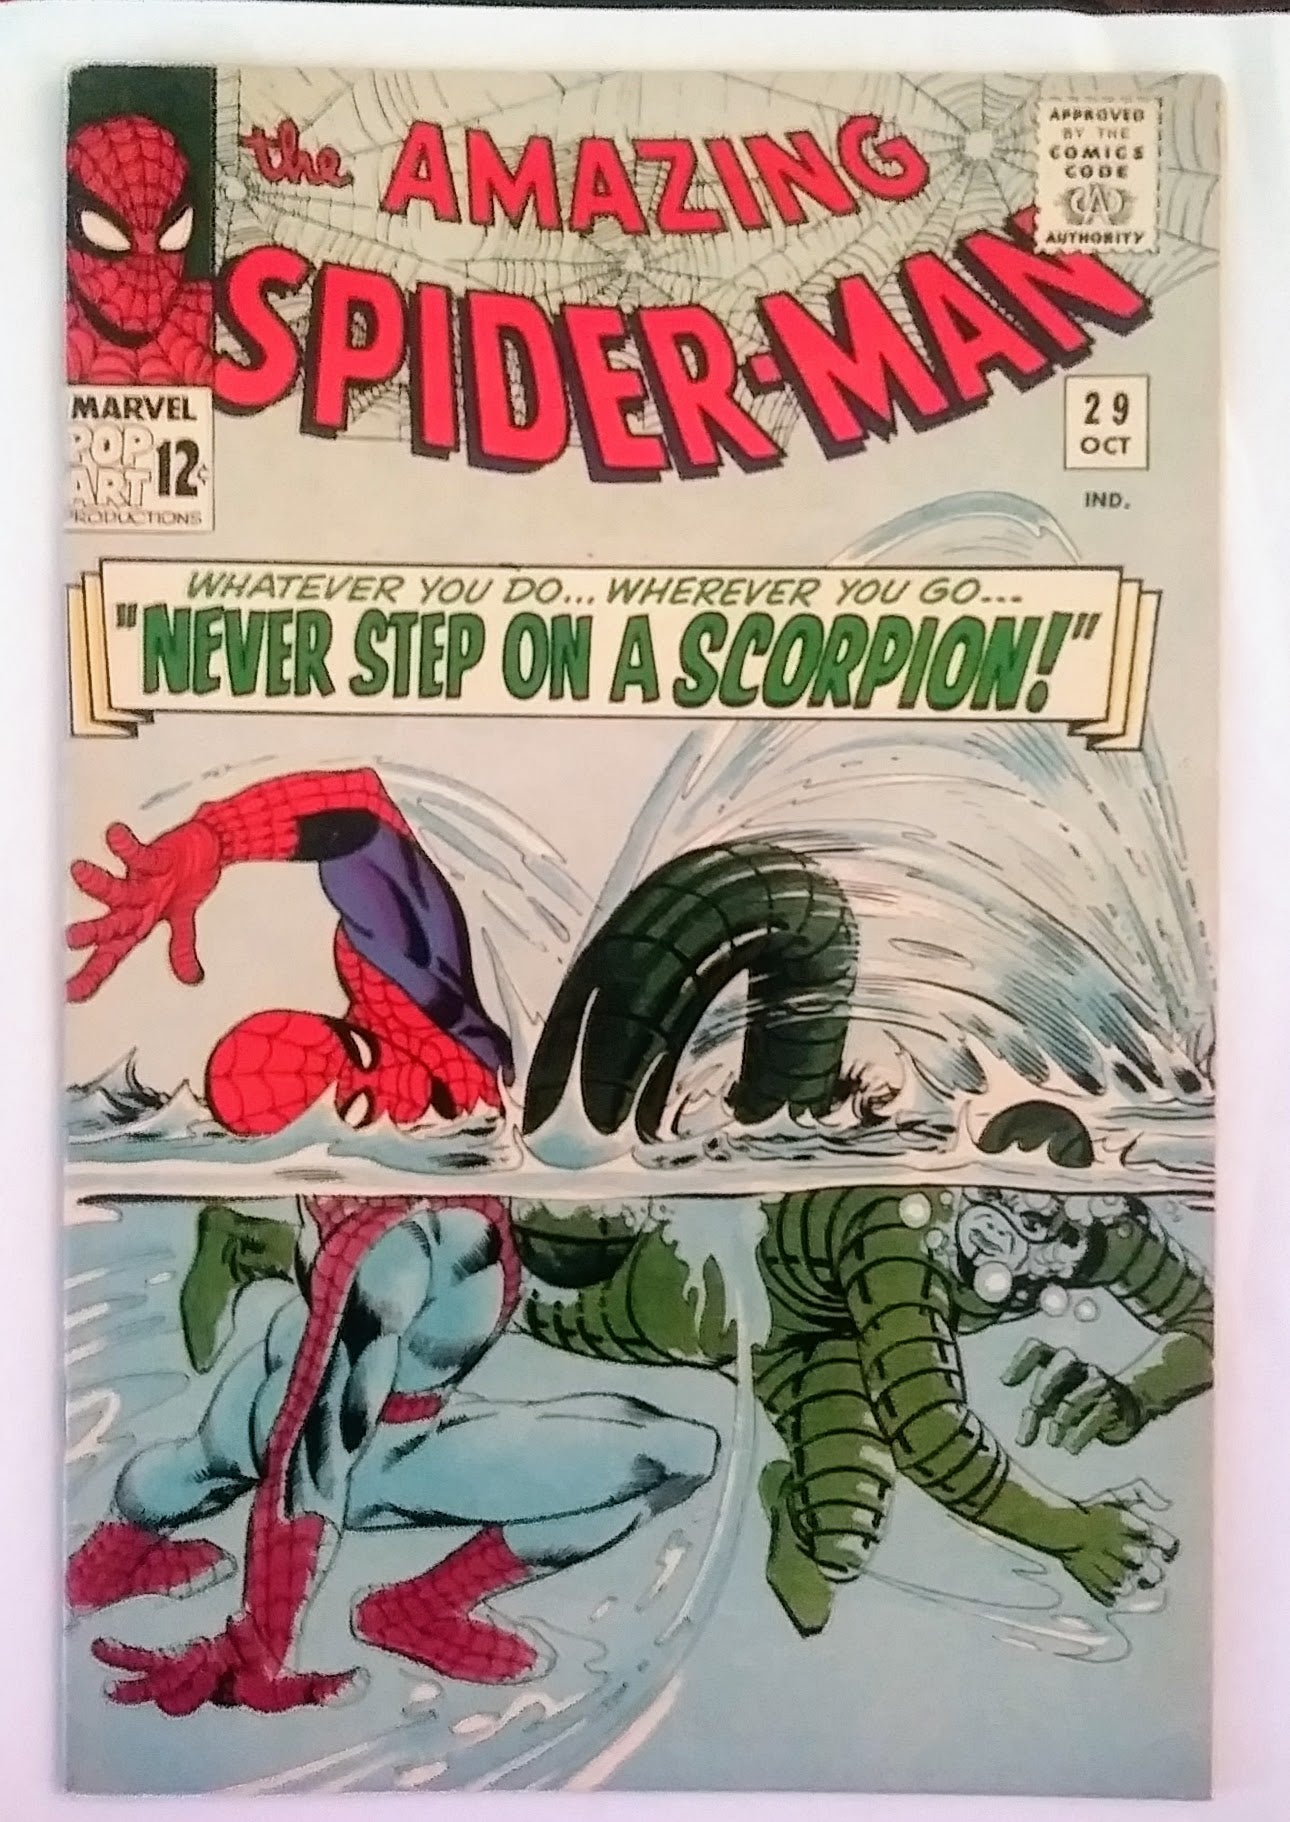 Amazing Spider-Man #029, Marvel Comics (October 1965)